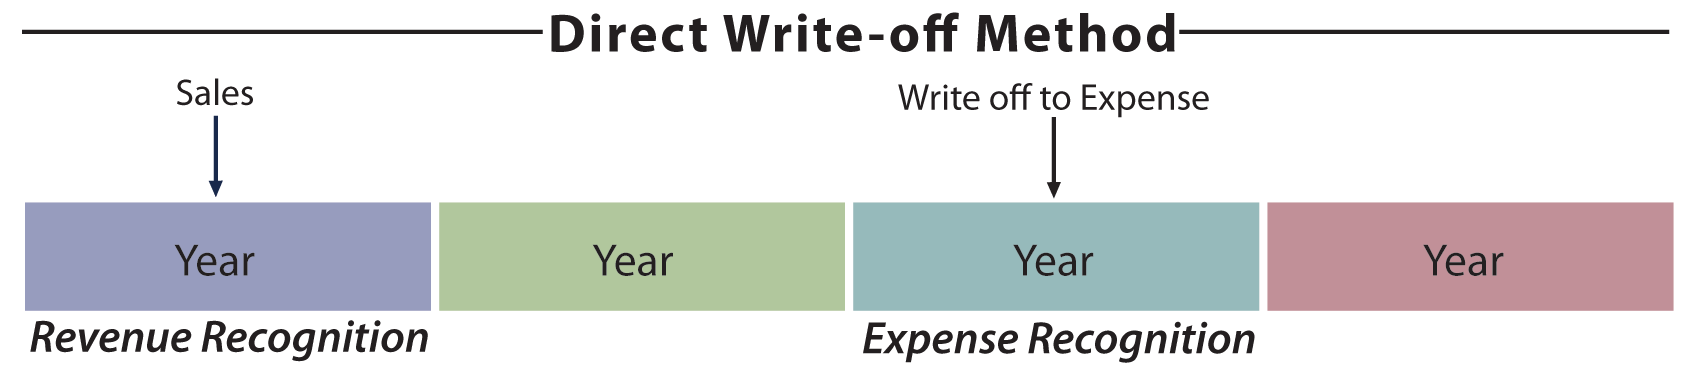 Direct Write-Off Method illustration